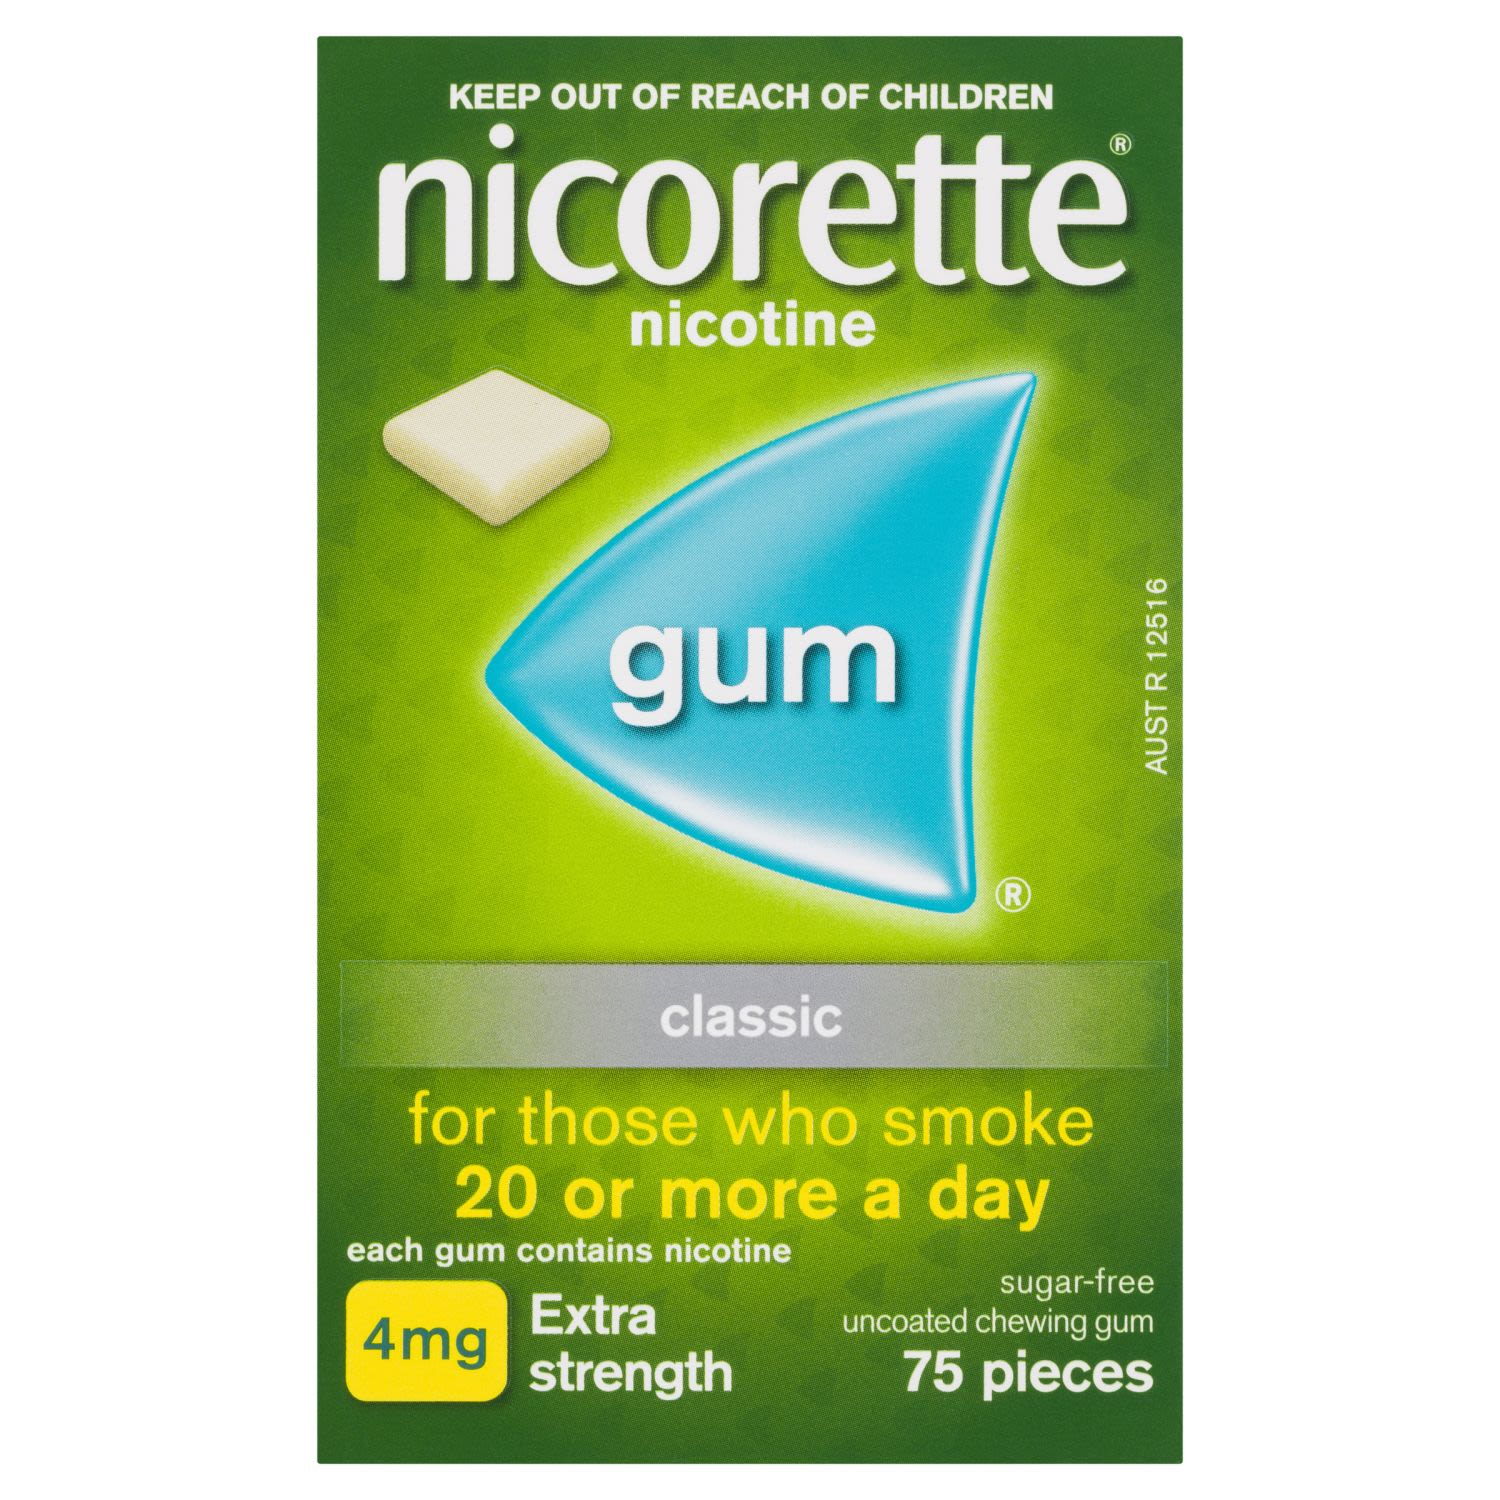 Nicorette Quit Smoking Nicotine Gum Classic 4mg Extra Strength, 75 Each